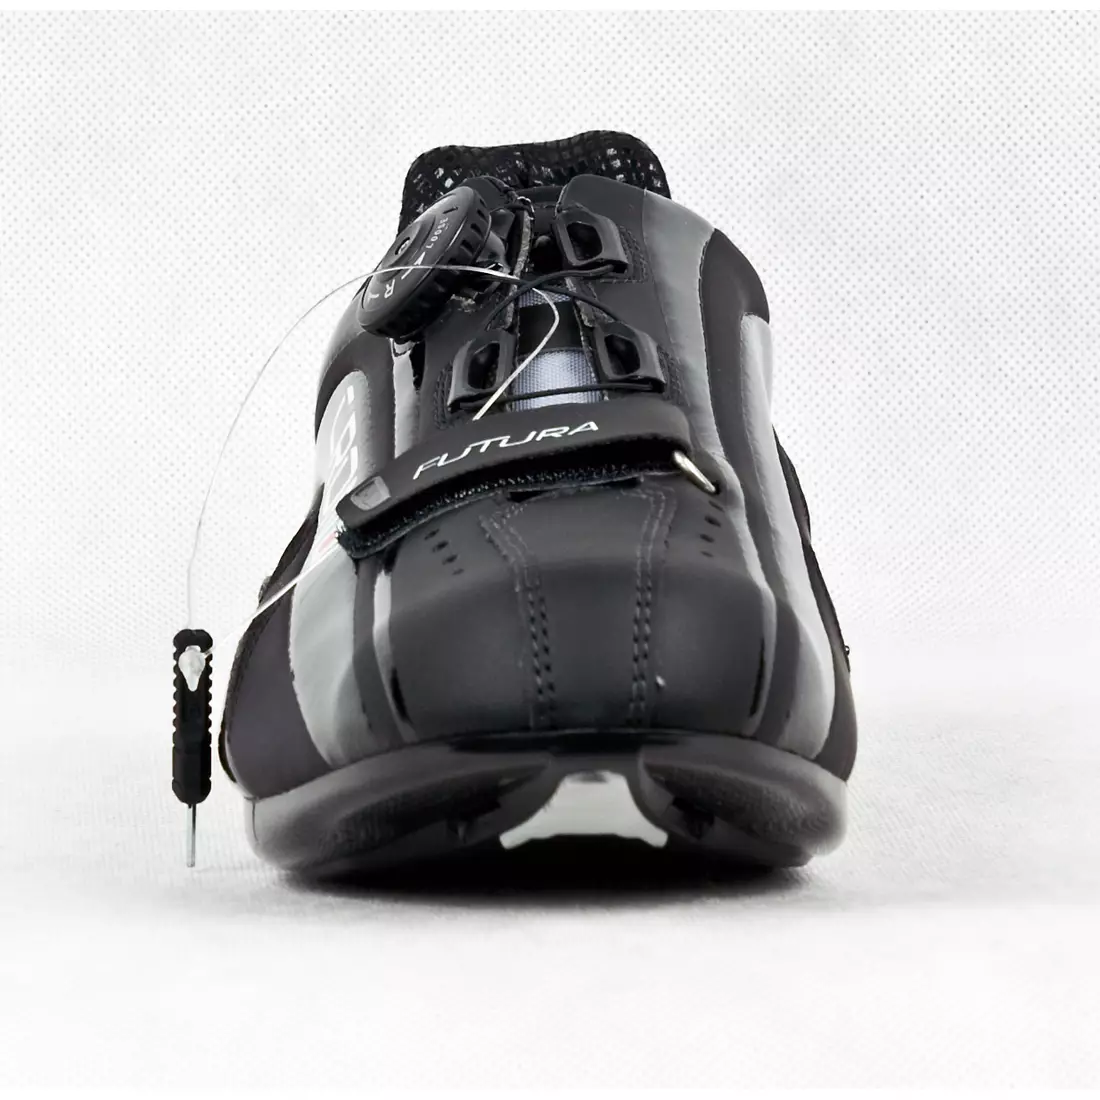 CRONO FUTURA NYLON - pantofi de ciclism rutier - culoare: Negru